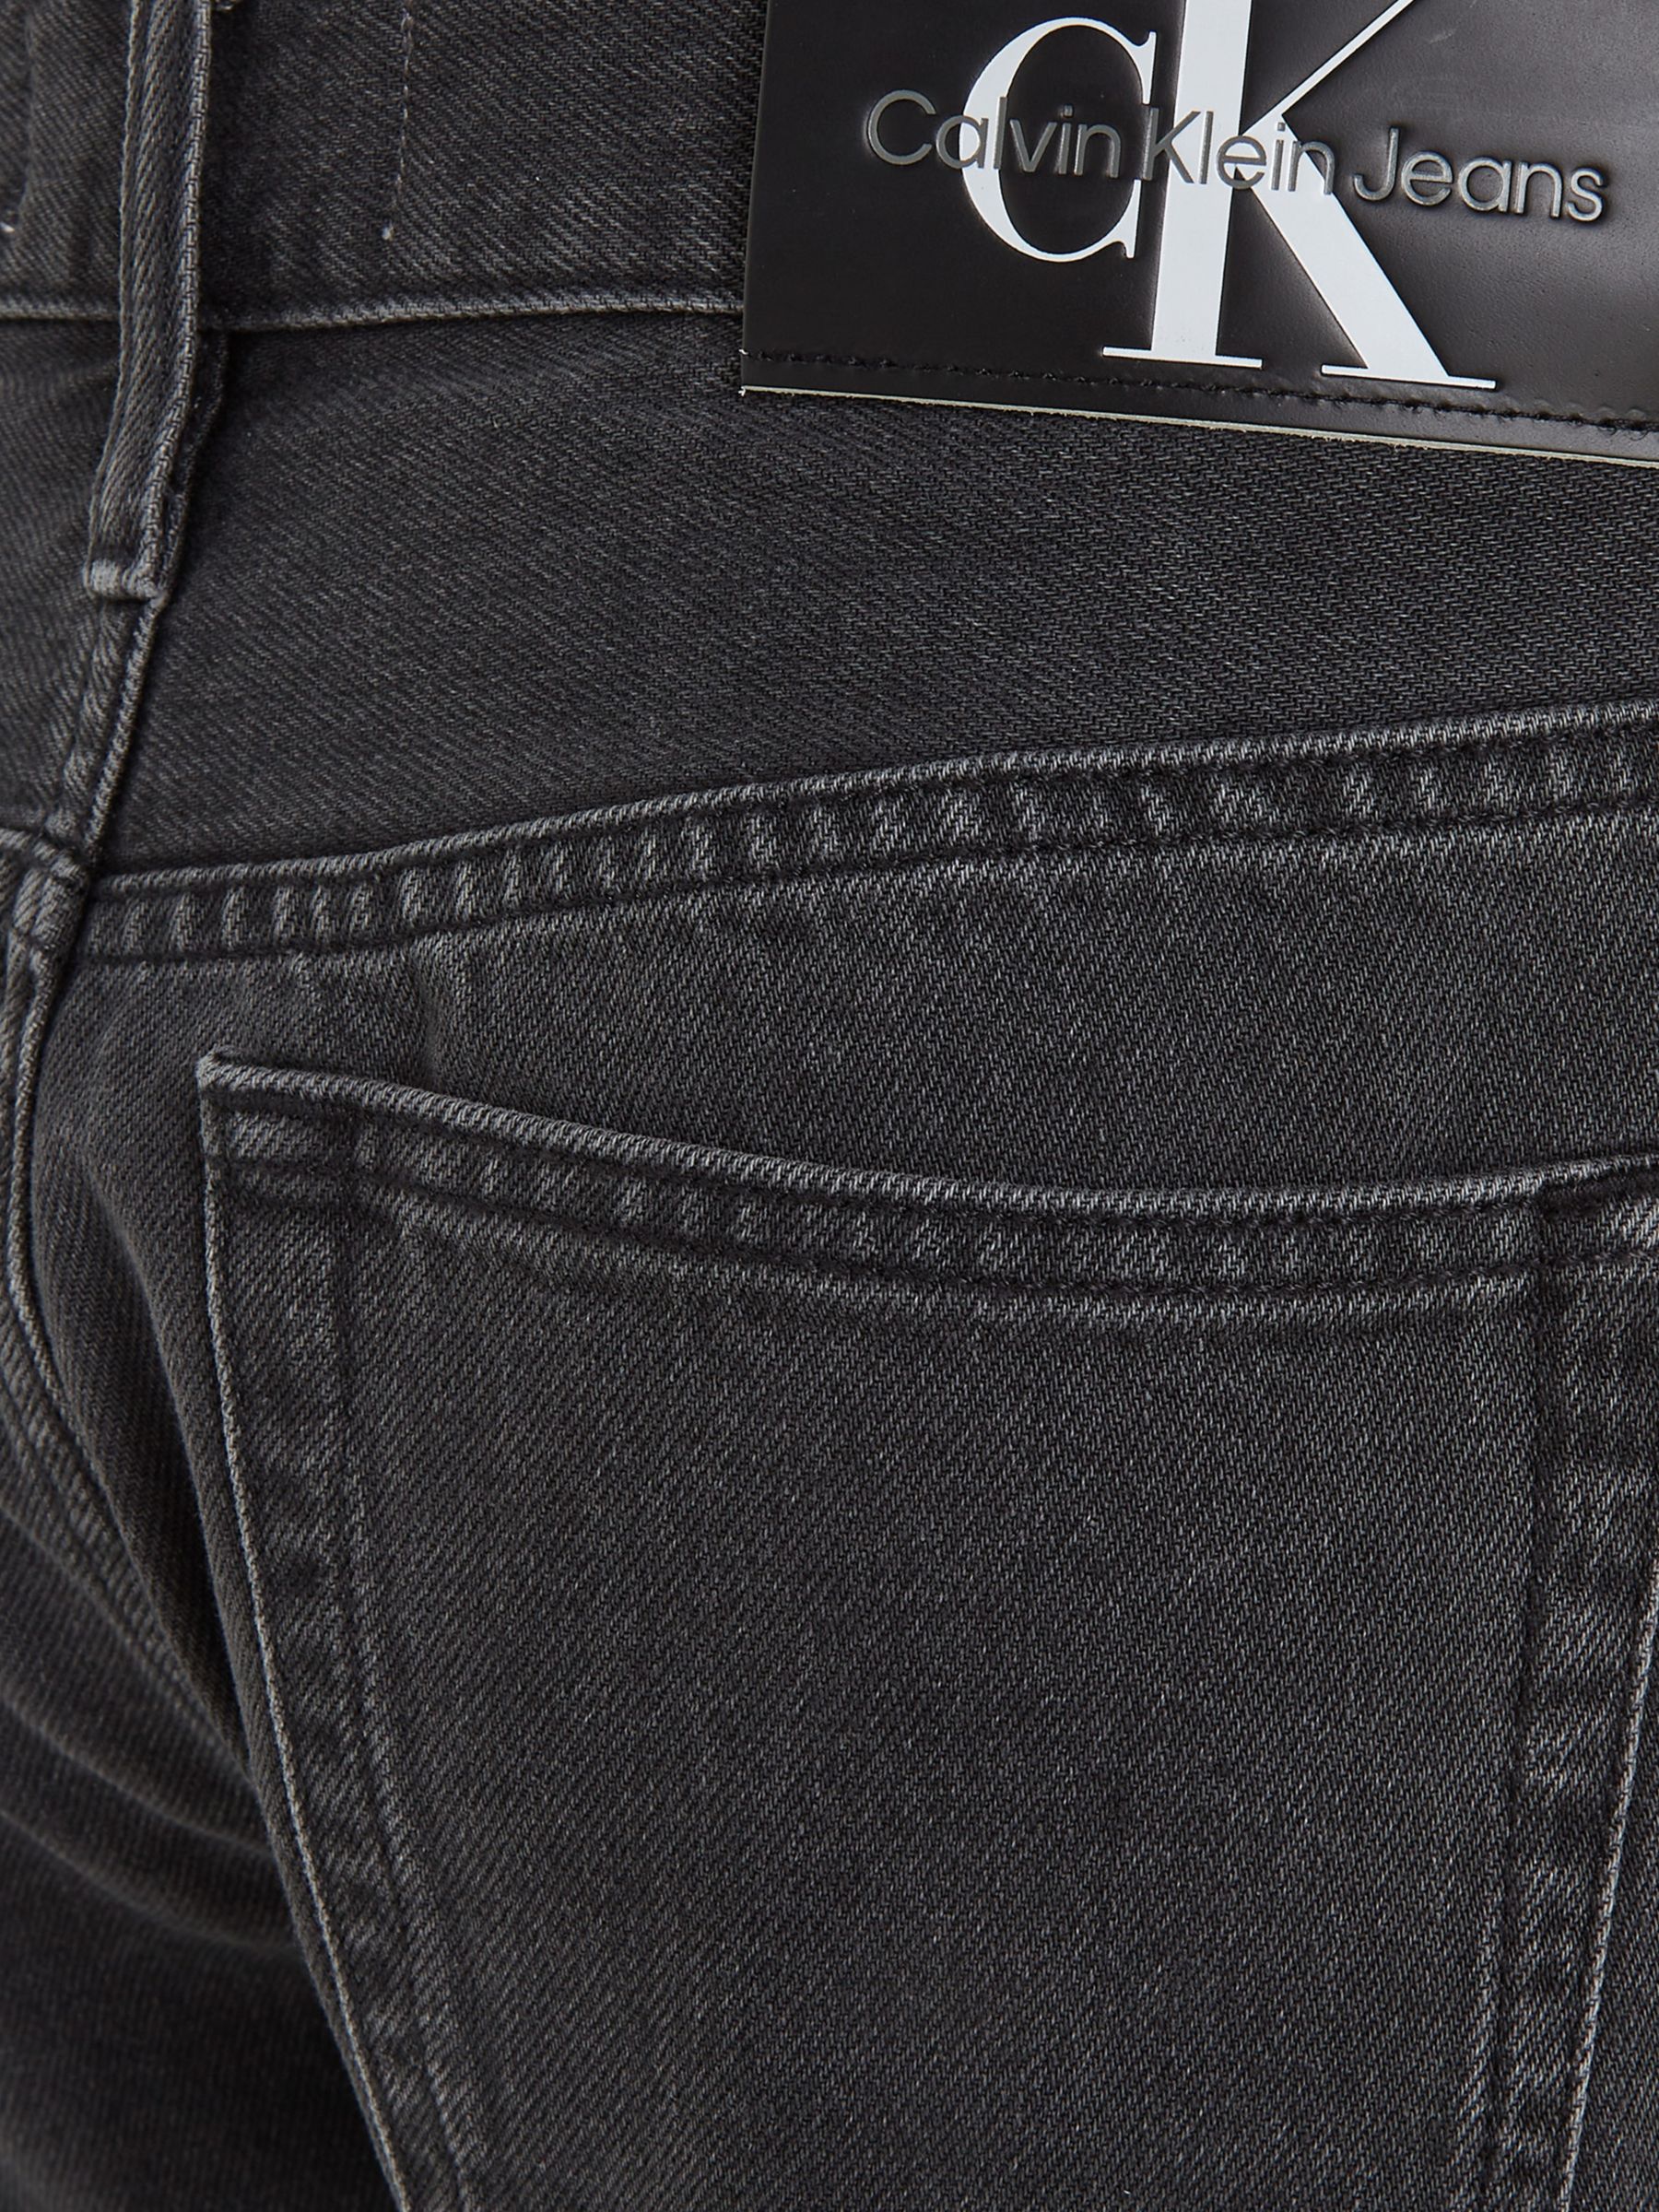 Calvin Klein Jeans Regular Denim Shorts, Black, 28R